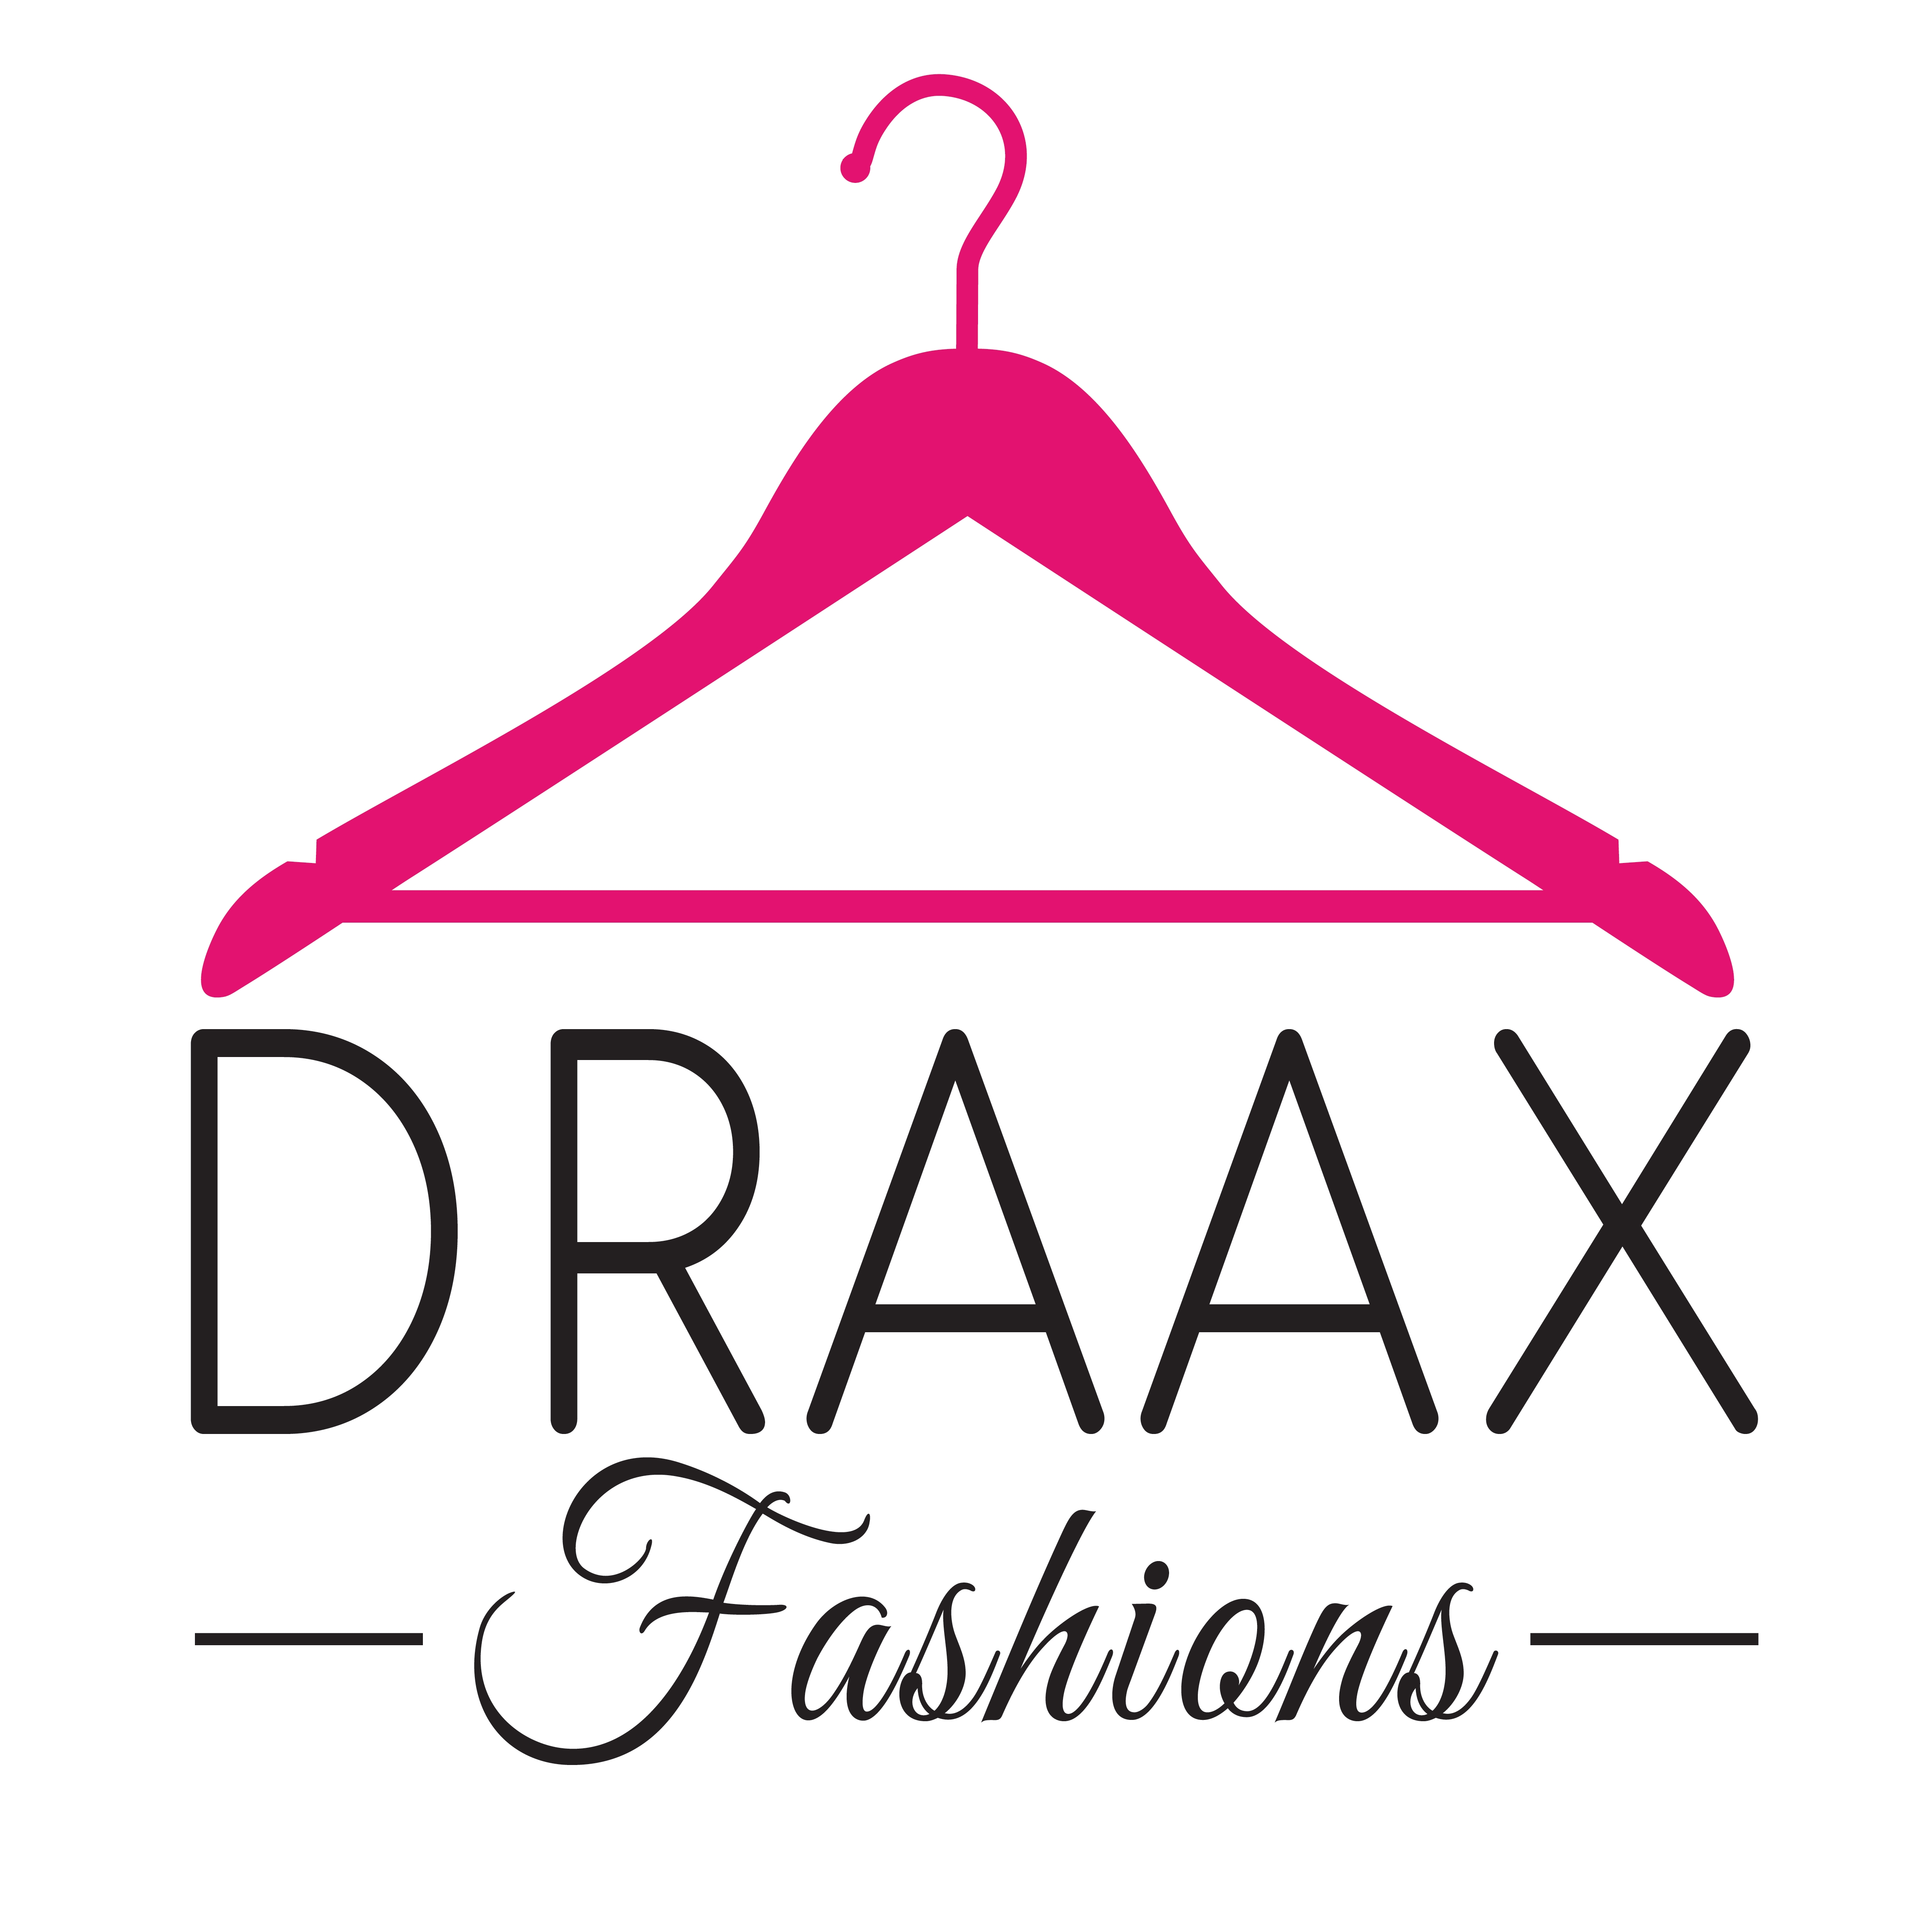 DRAAX fashions